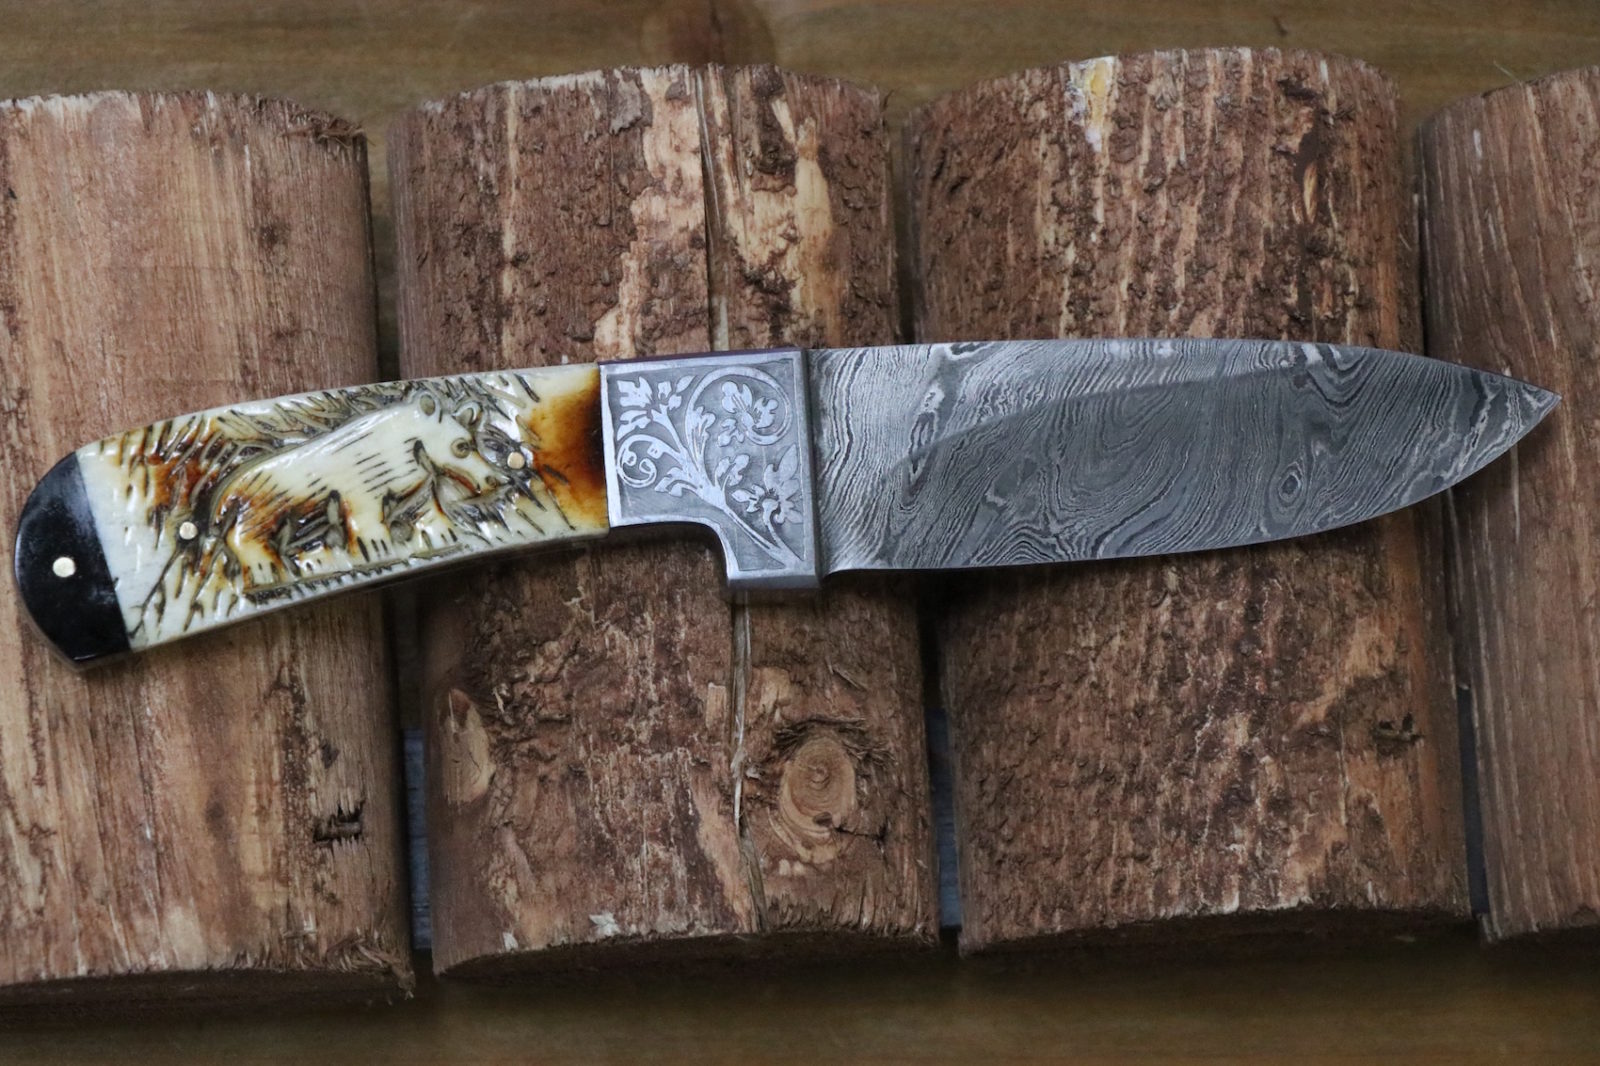 PW-9714 HAND MADE STAINLESS STEEL SKINING KNIFE-ENGRAVED BURN CAMEL BONE 